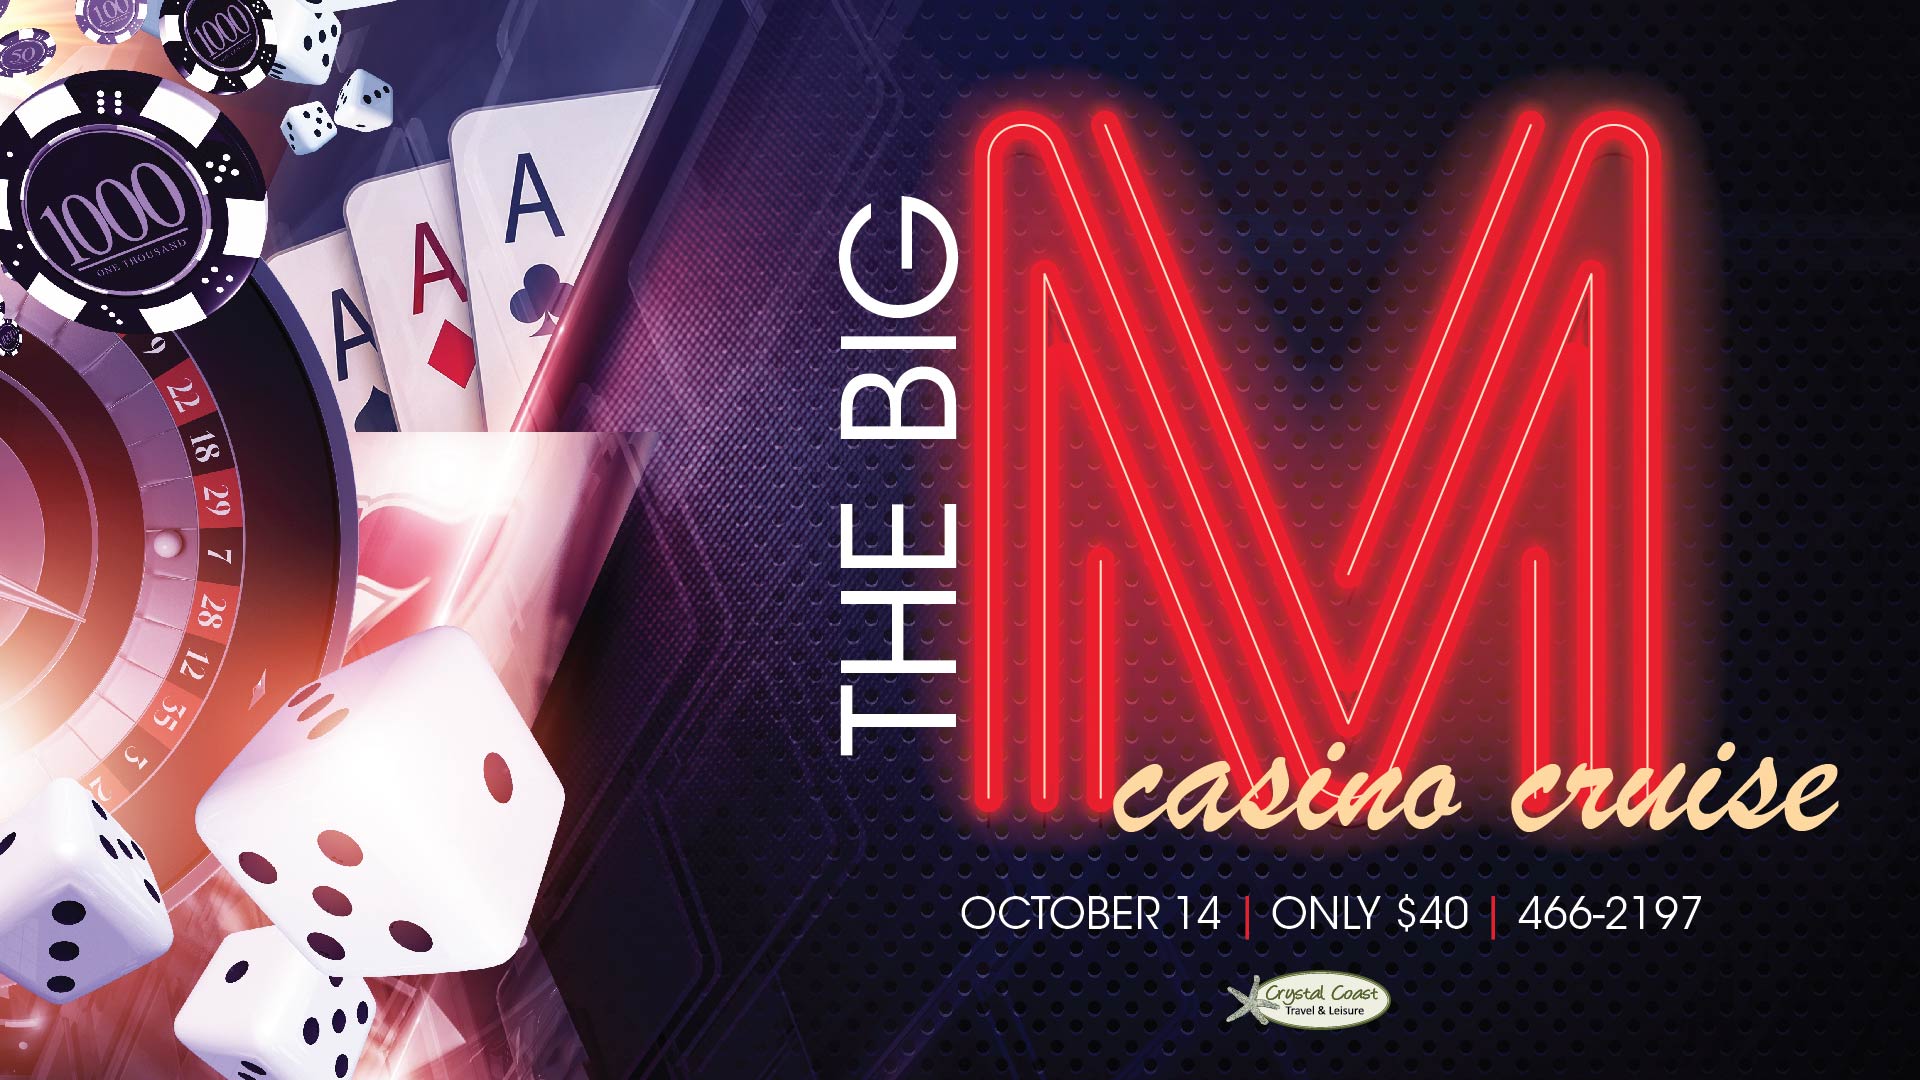 Big M Casino Trip Ad